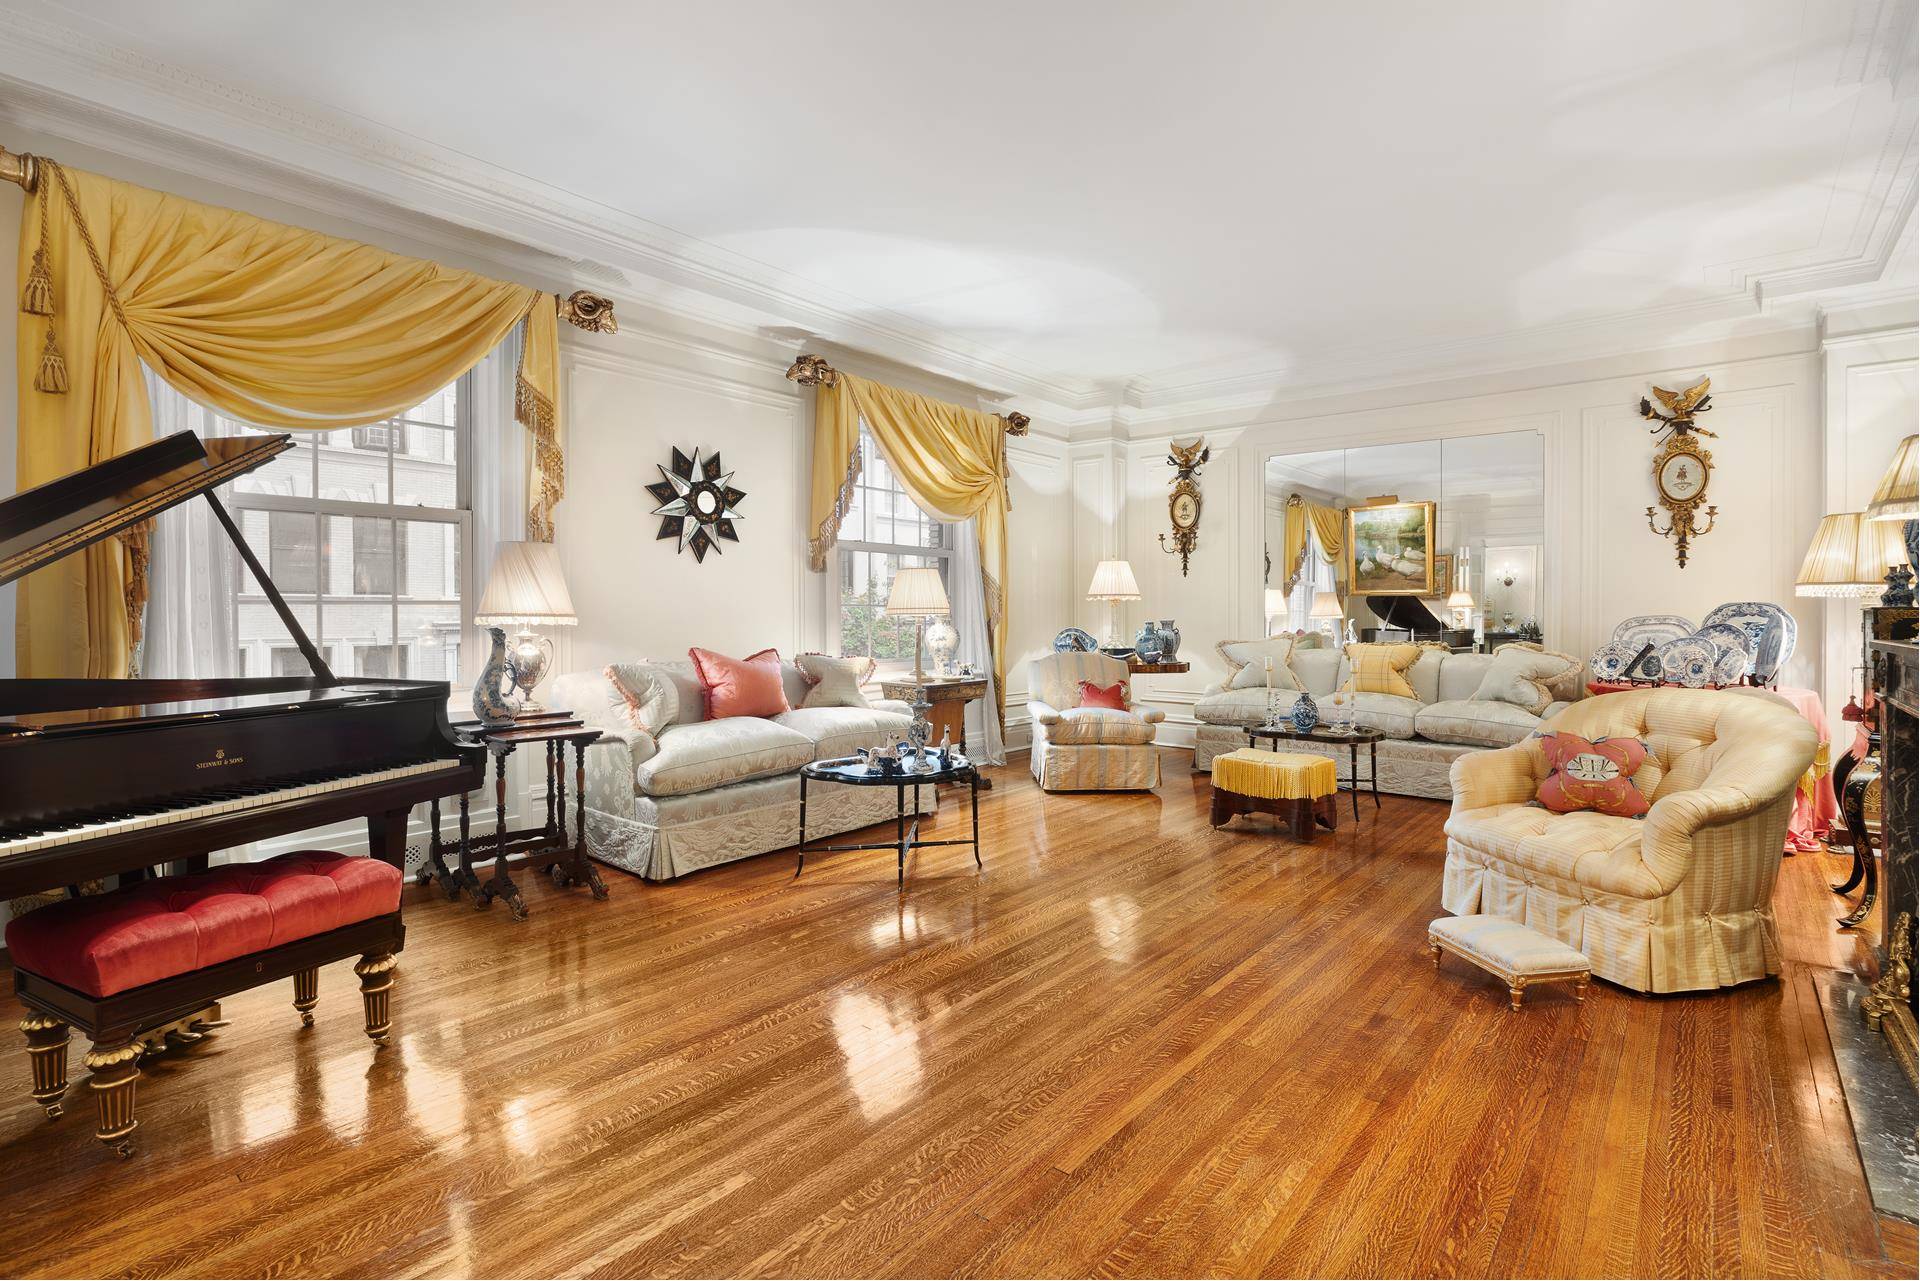 Beautiful designer prewar duplex apartment in excellent condition and perfect for entertaining.